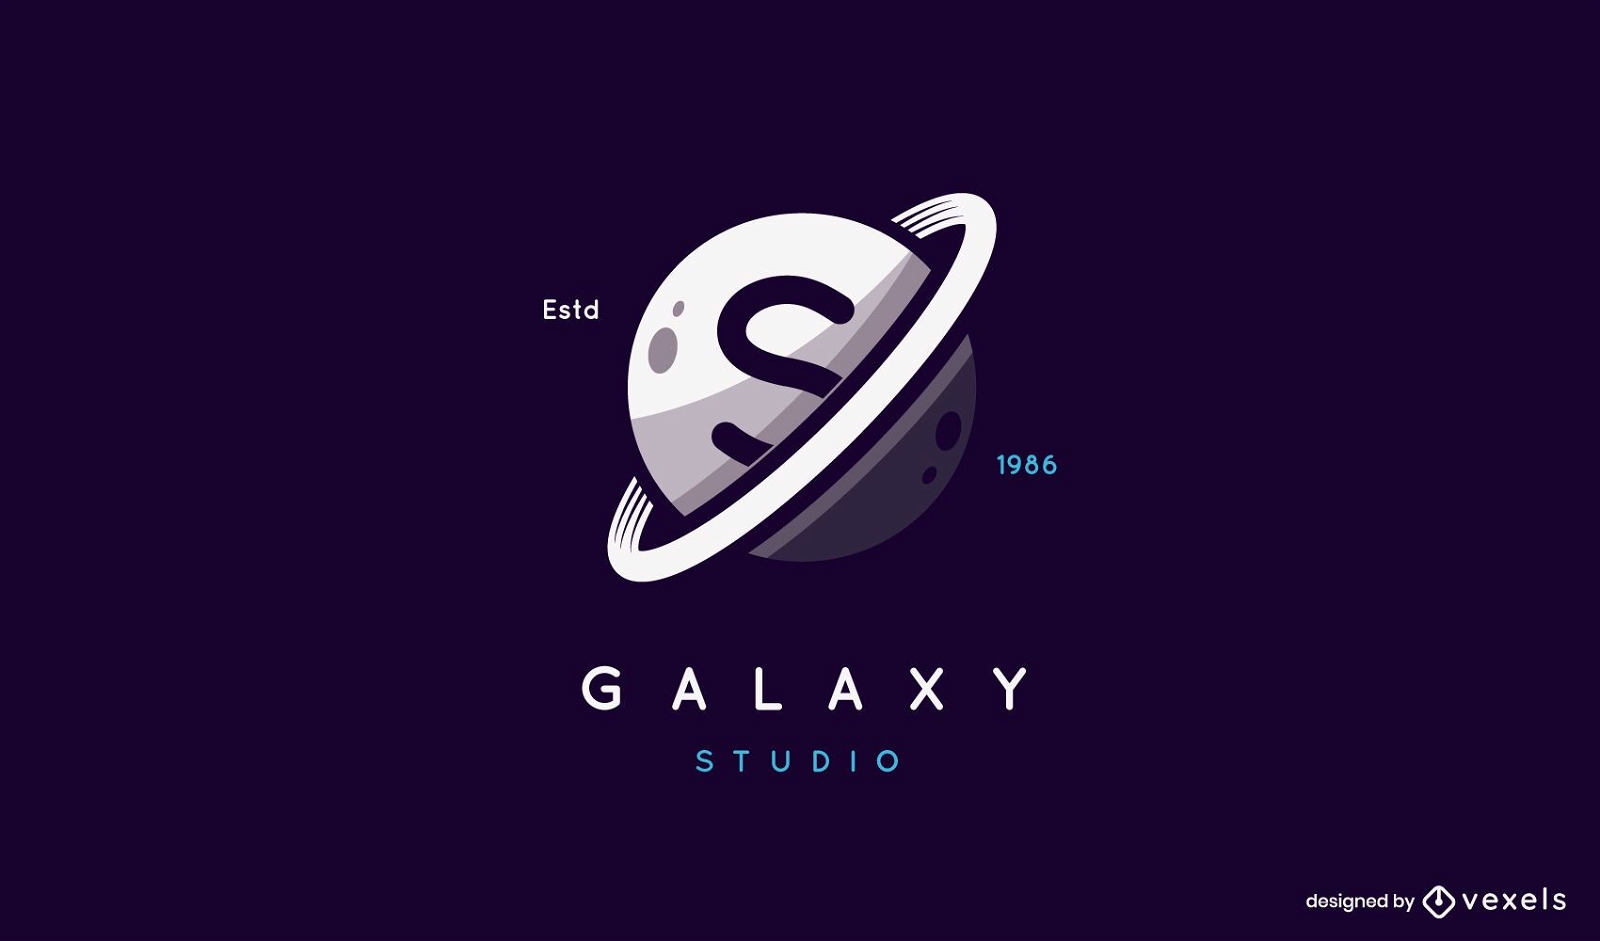 Brand New: An Appreciation of Saturn's Logo